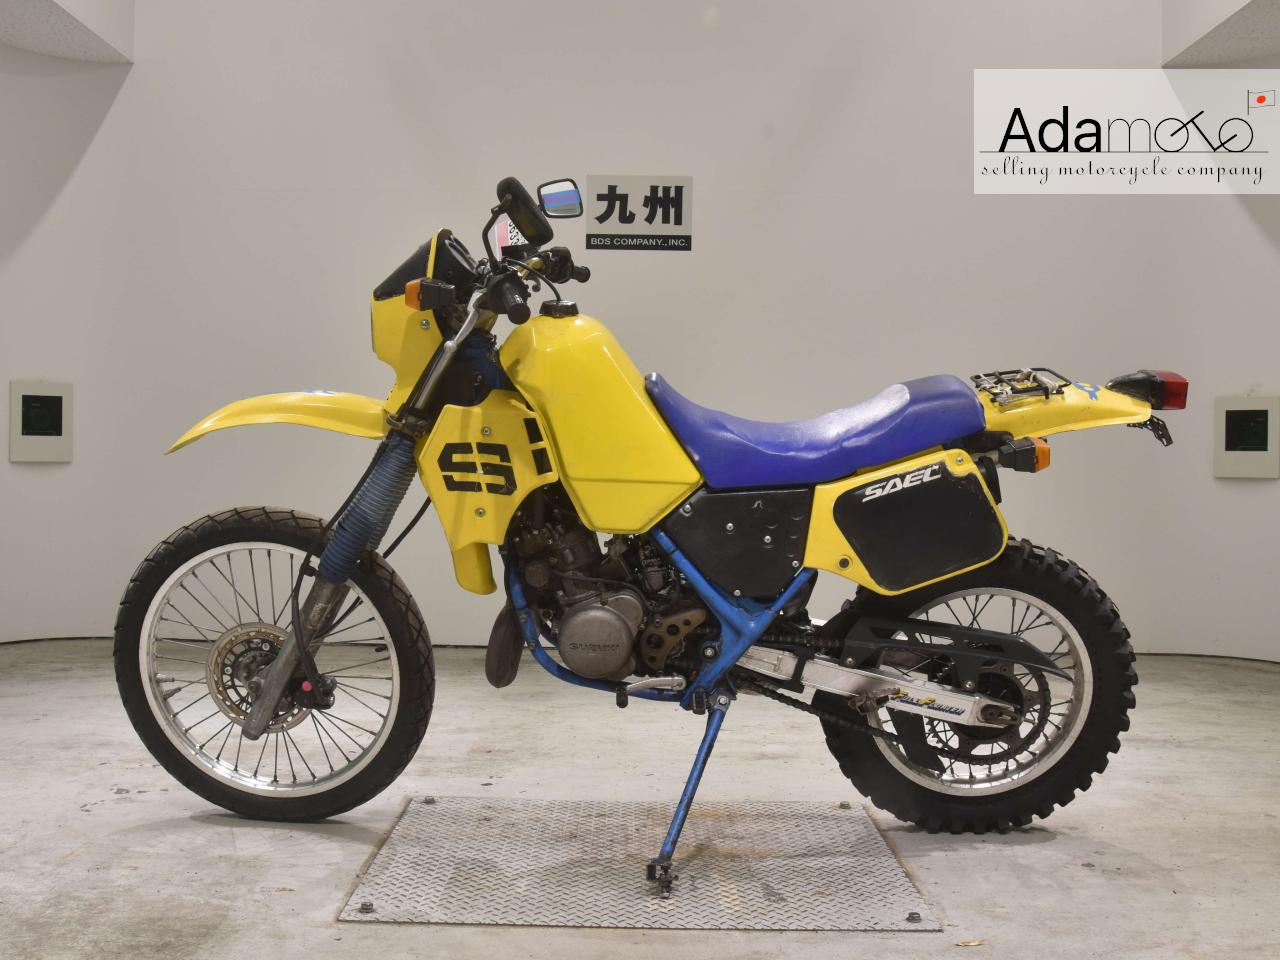 Suzuki RH250 - Adamoto - Motorcycles from Japan